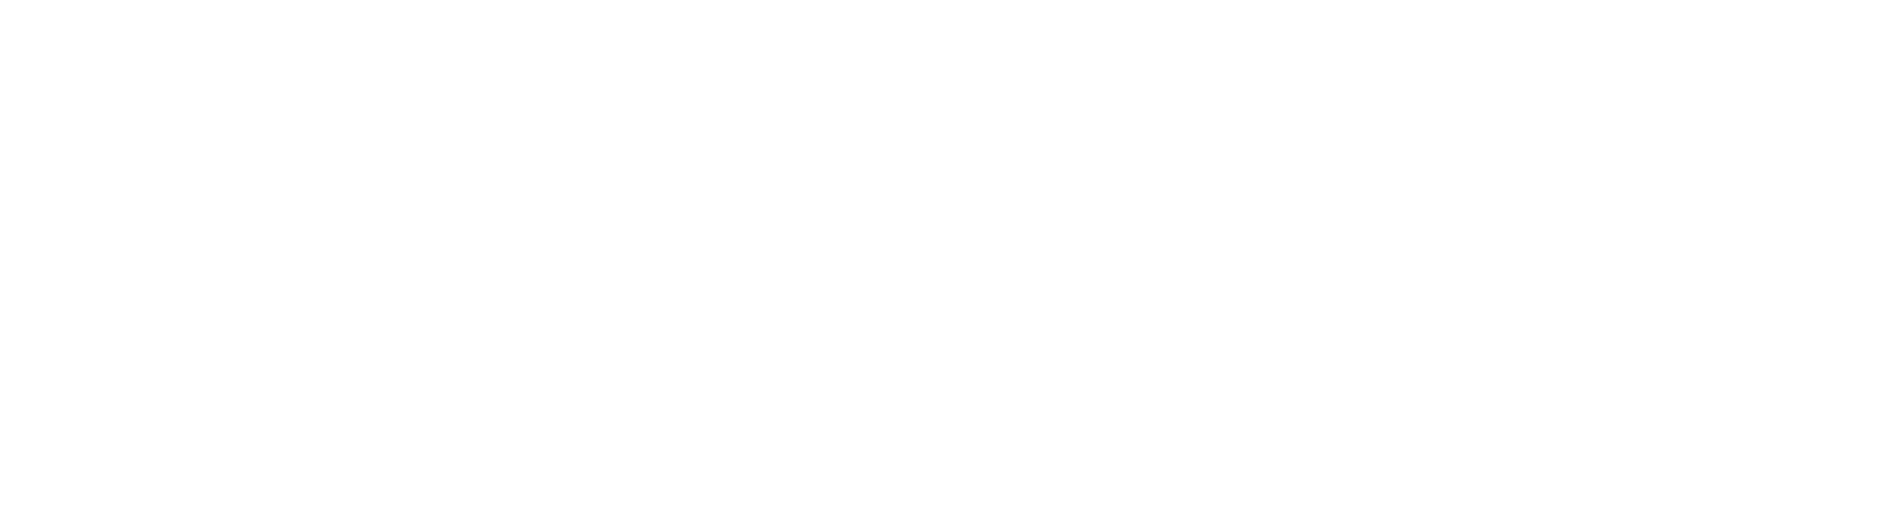 Okokrim_logo_hvit.png